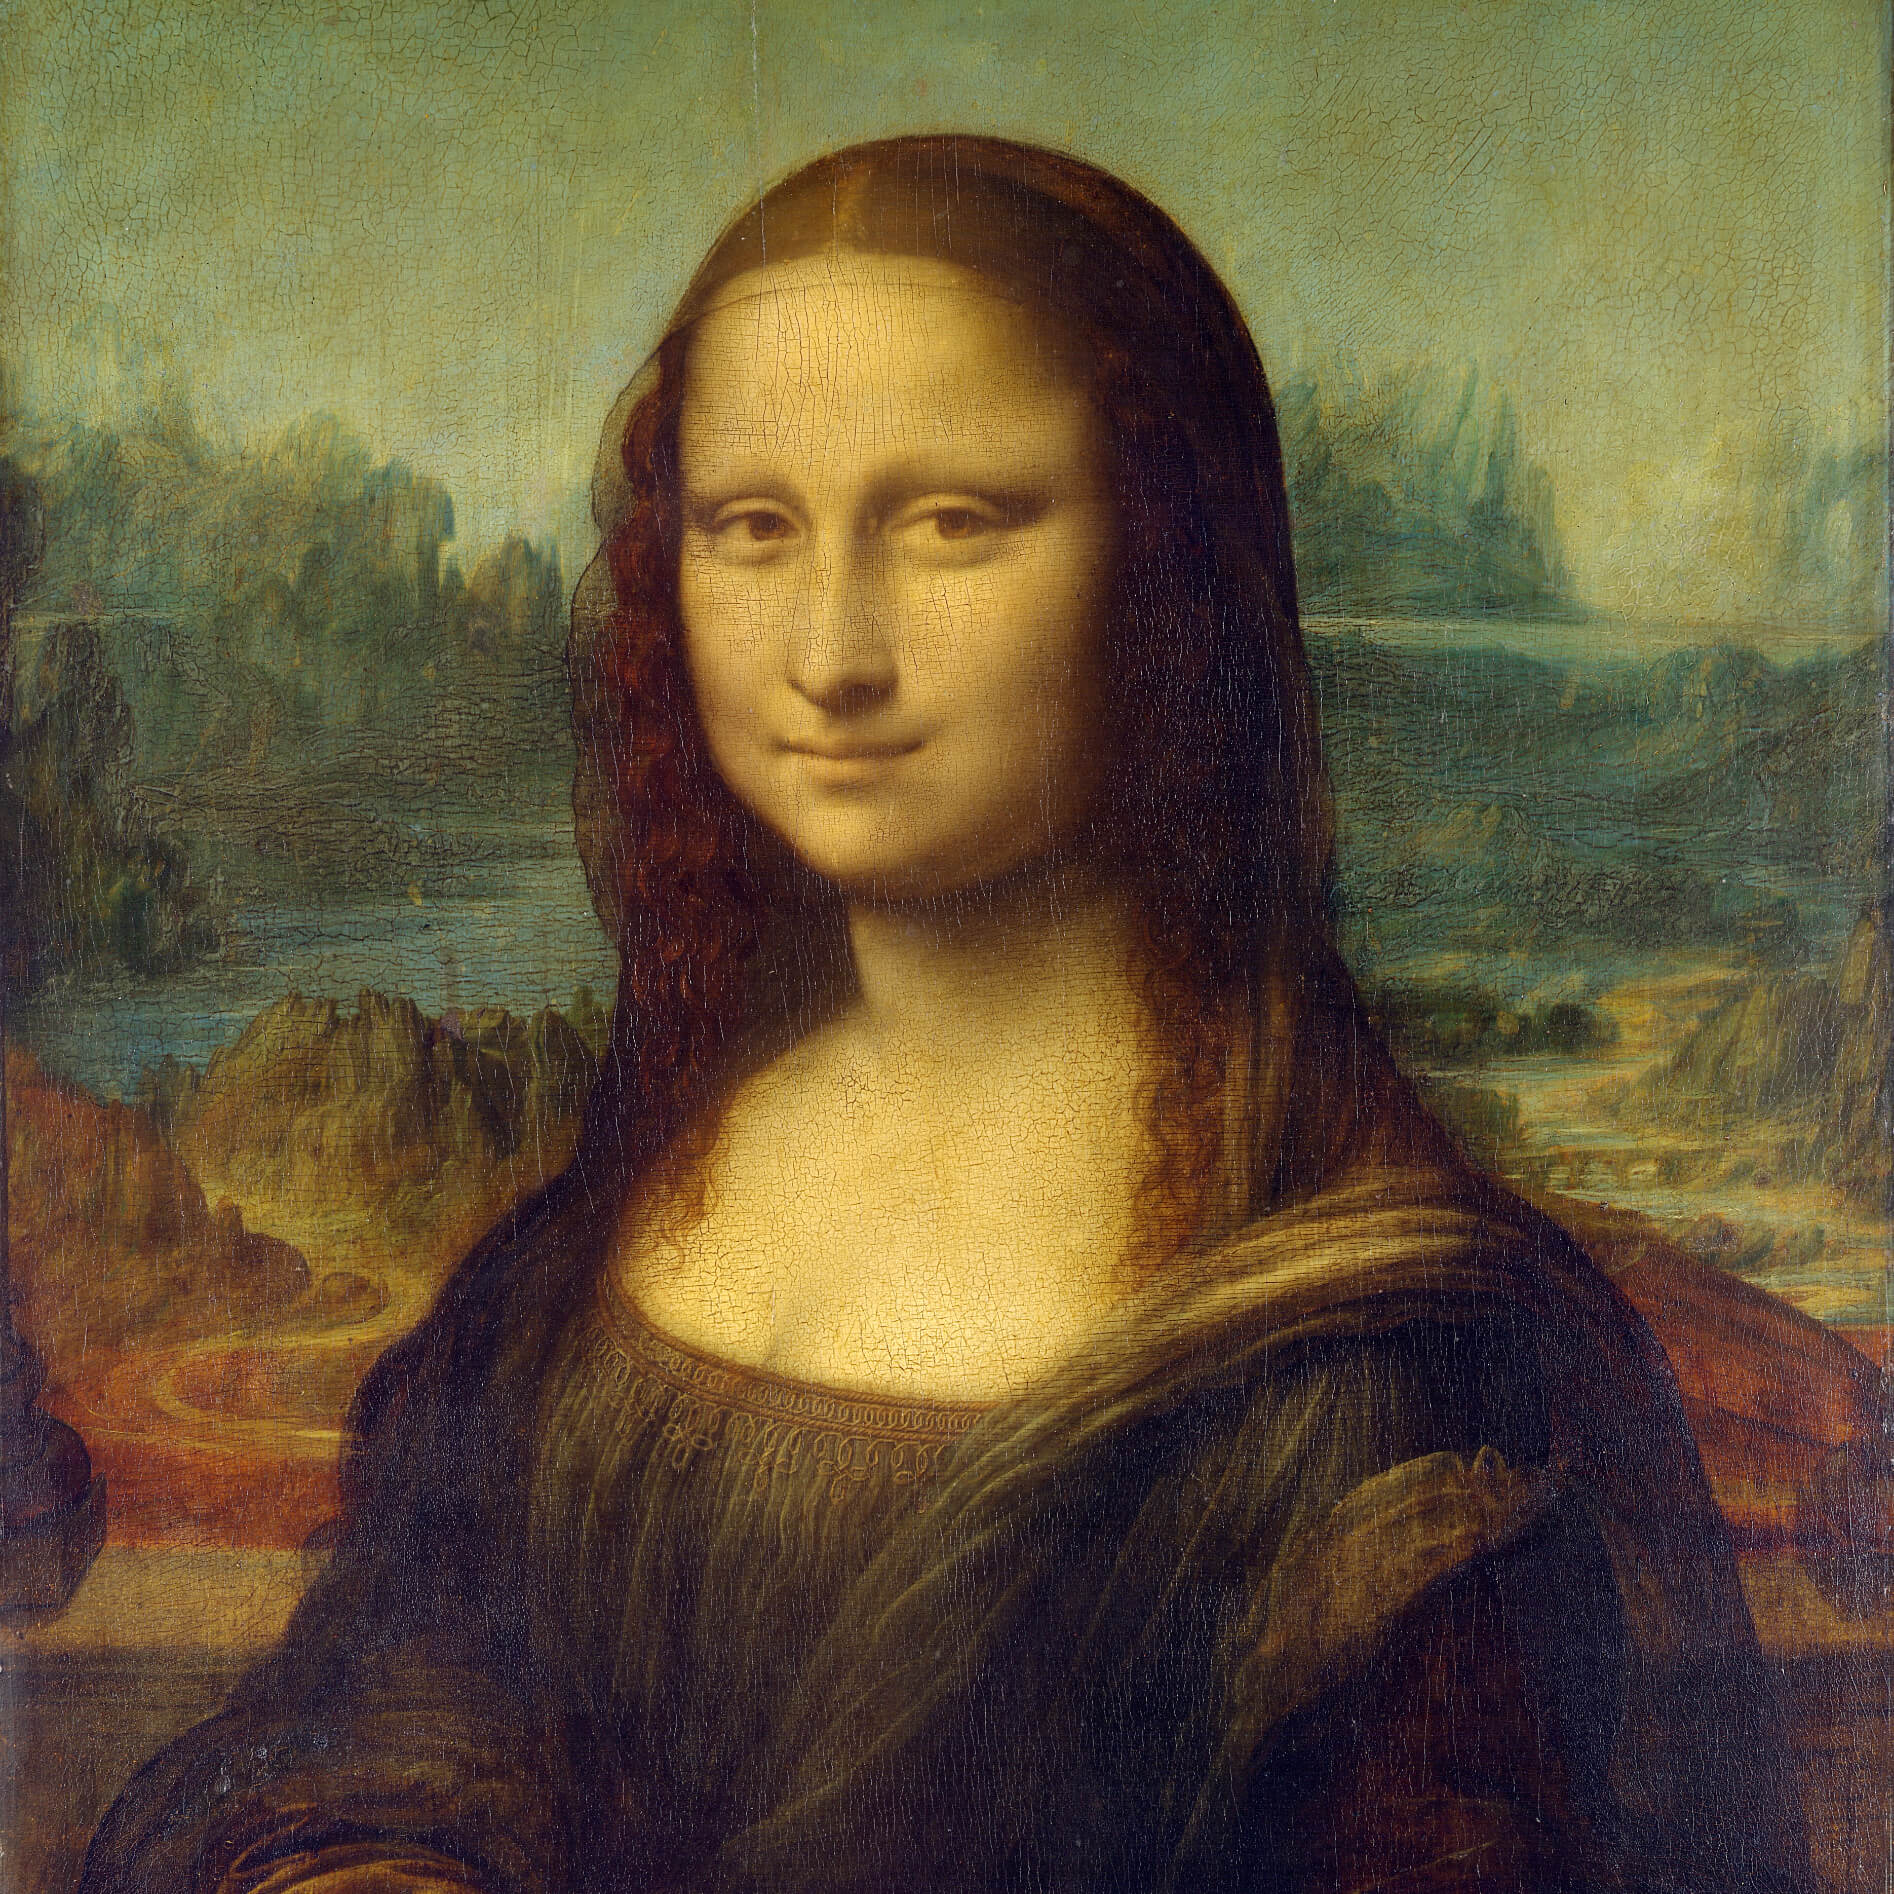 The Mona Lisa golden ratio